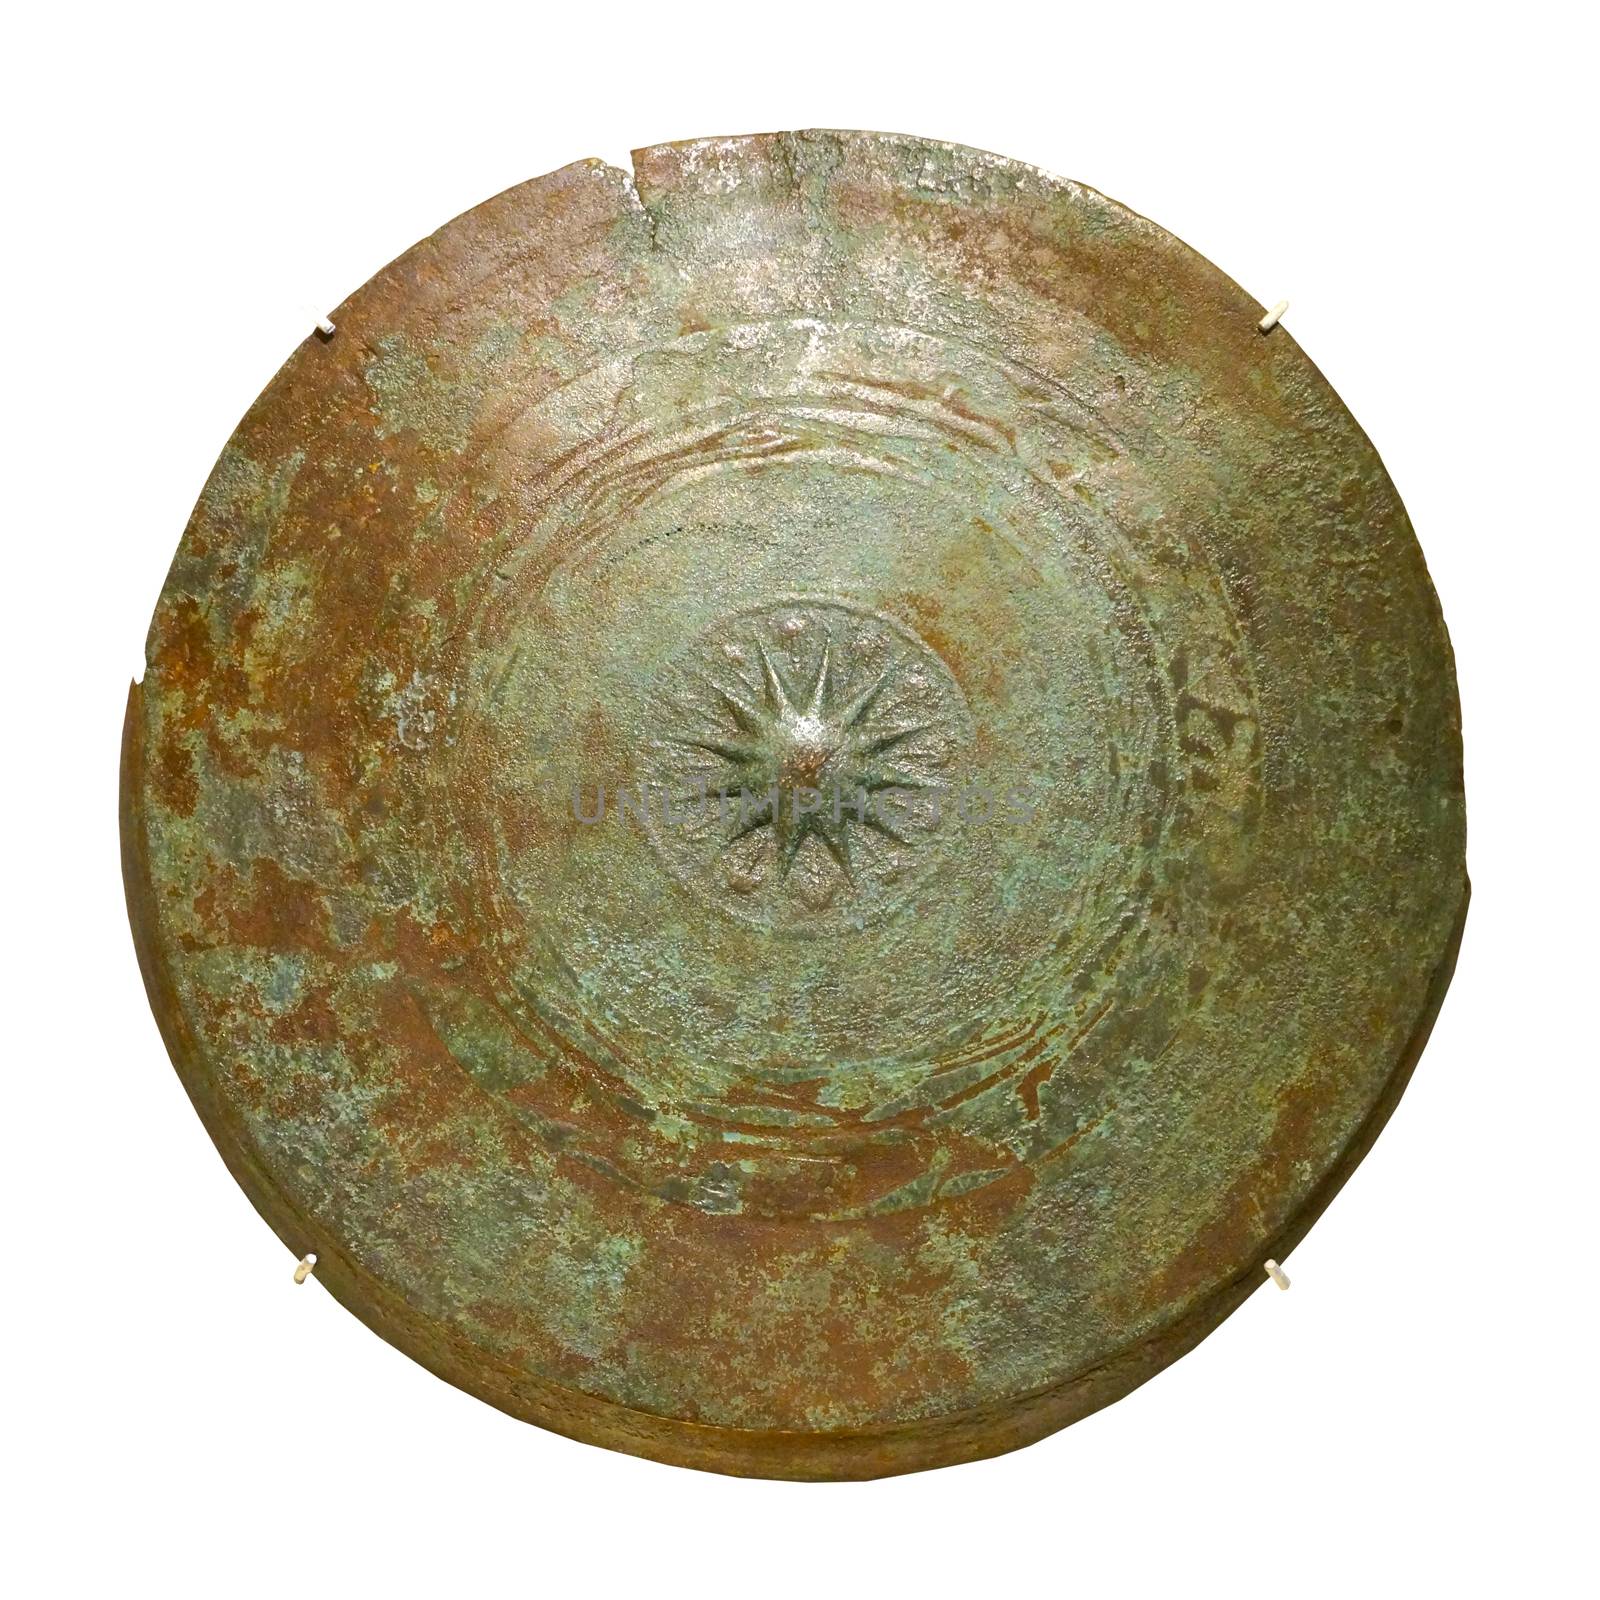 Upper part of bronze kettle drum, Prehistoric period, Metal Age.